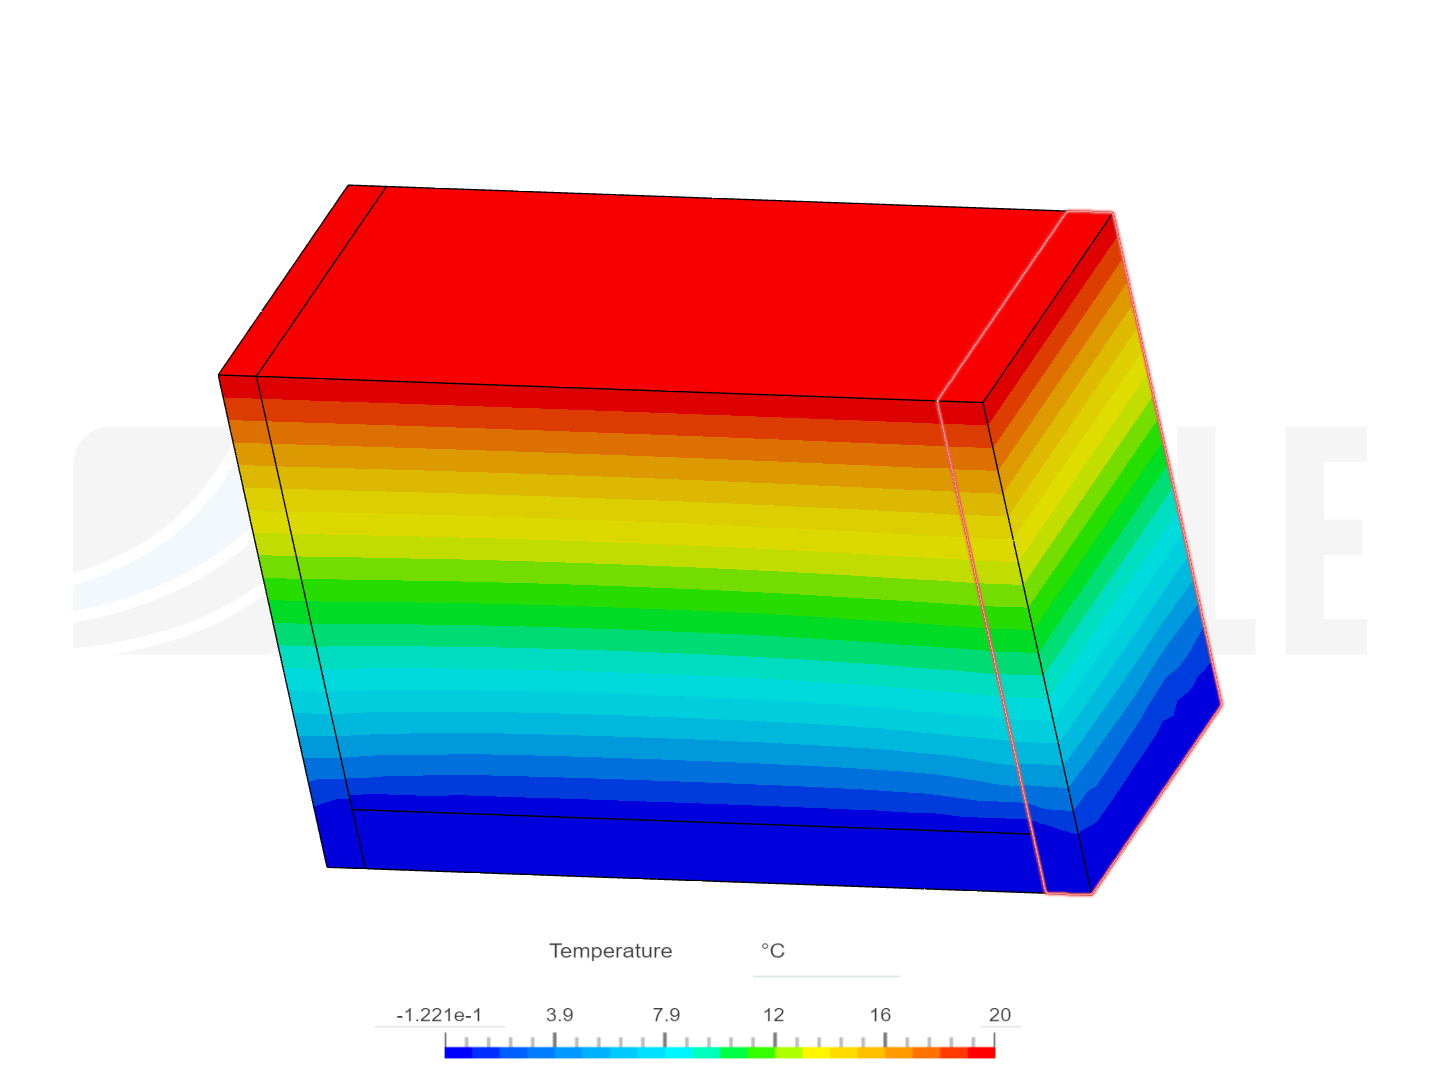 heat transfer analysis image